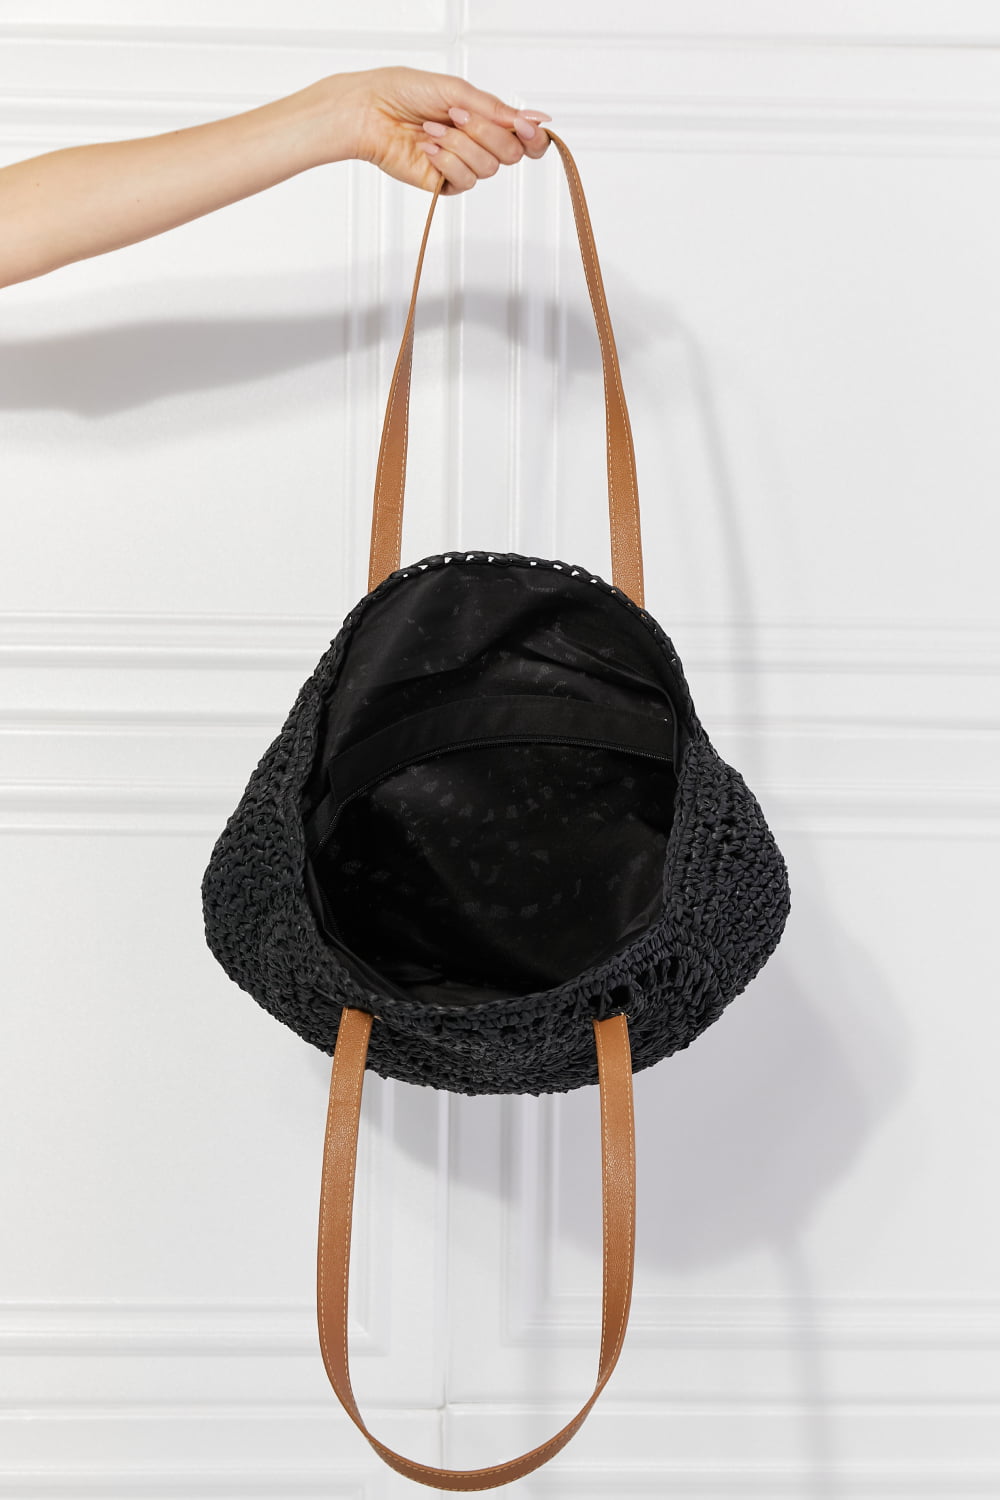 Justin Taylor C'est La Vie Crochet Handbag in Black free shipping -Oh Em Gee Boutique